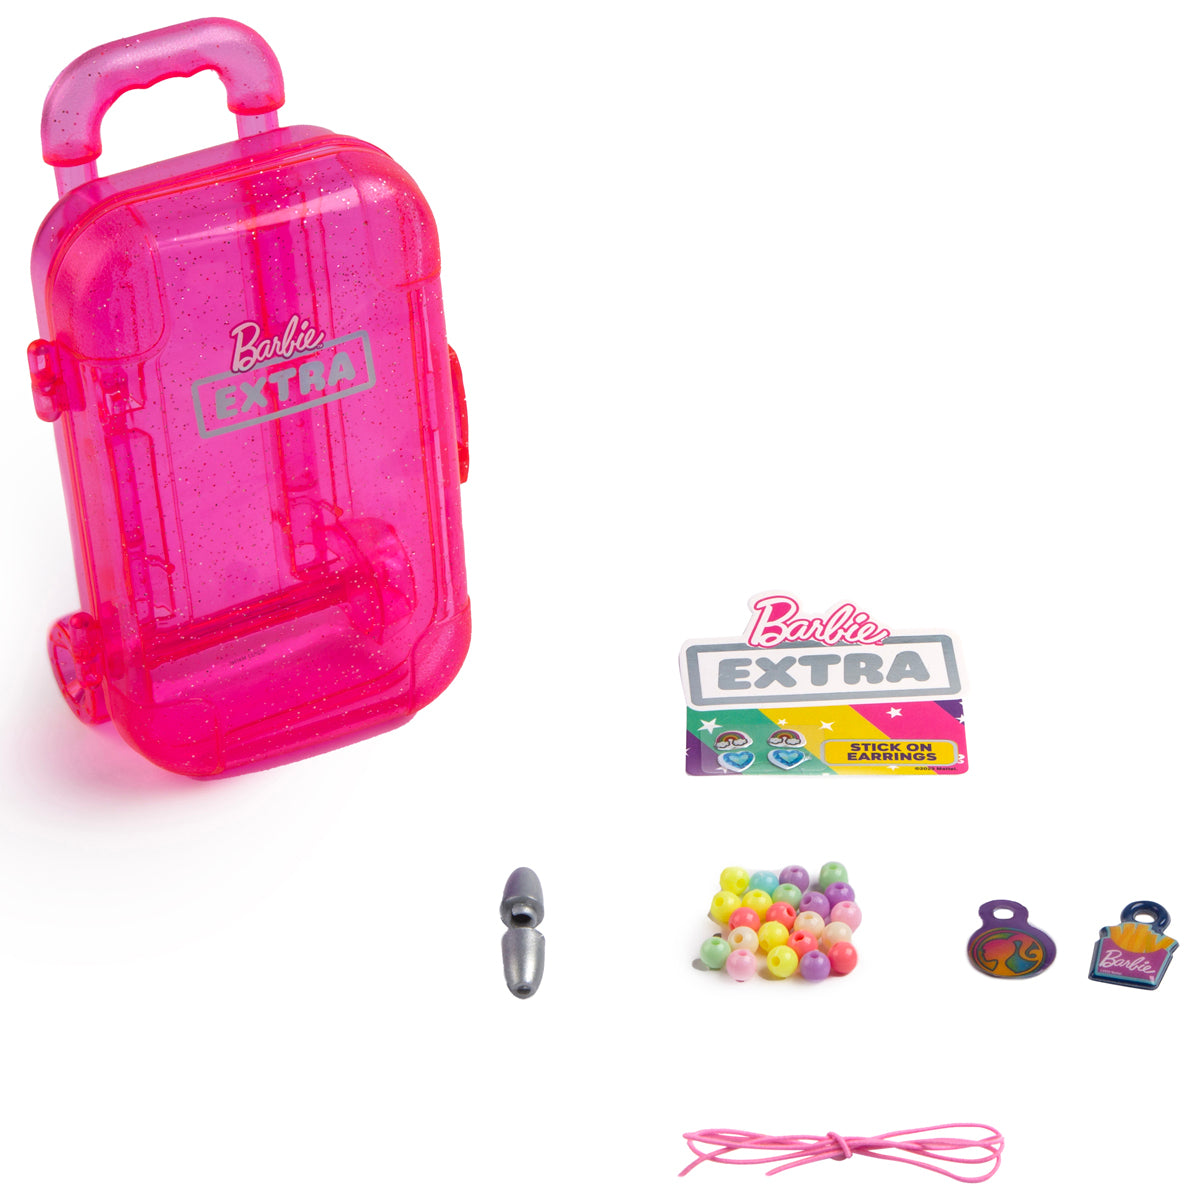 Barbie Extra Mini Jewellery Surprise Suitcase (Styles Vary)